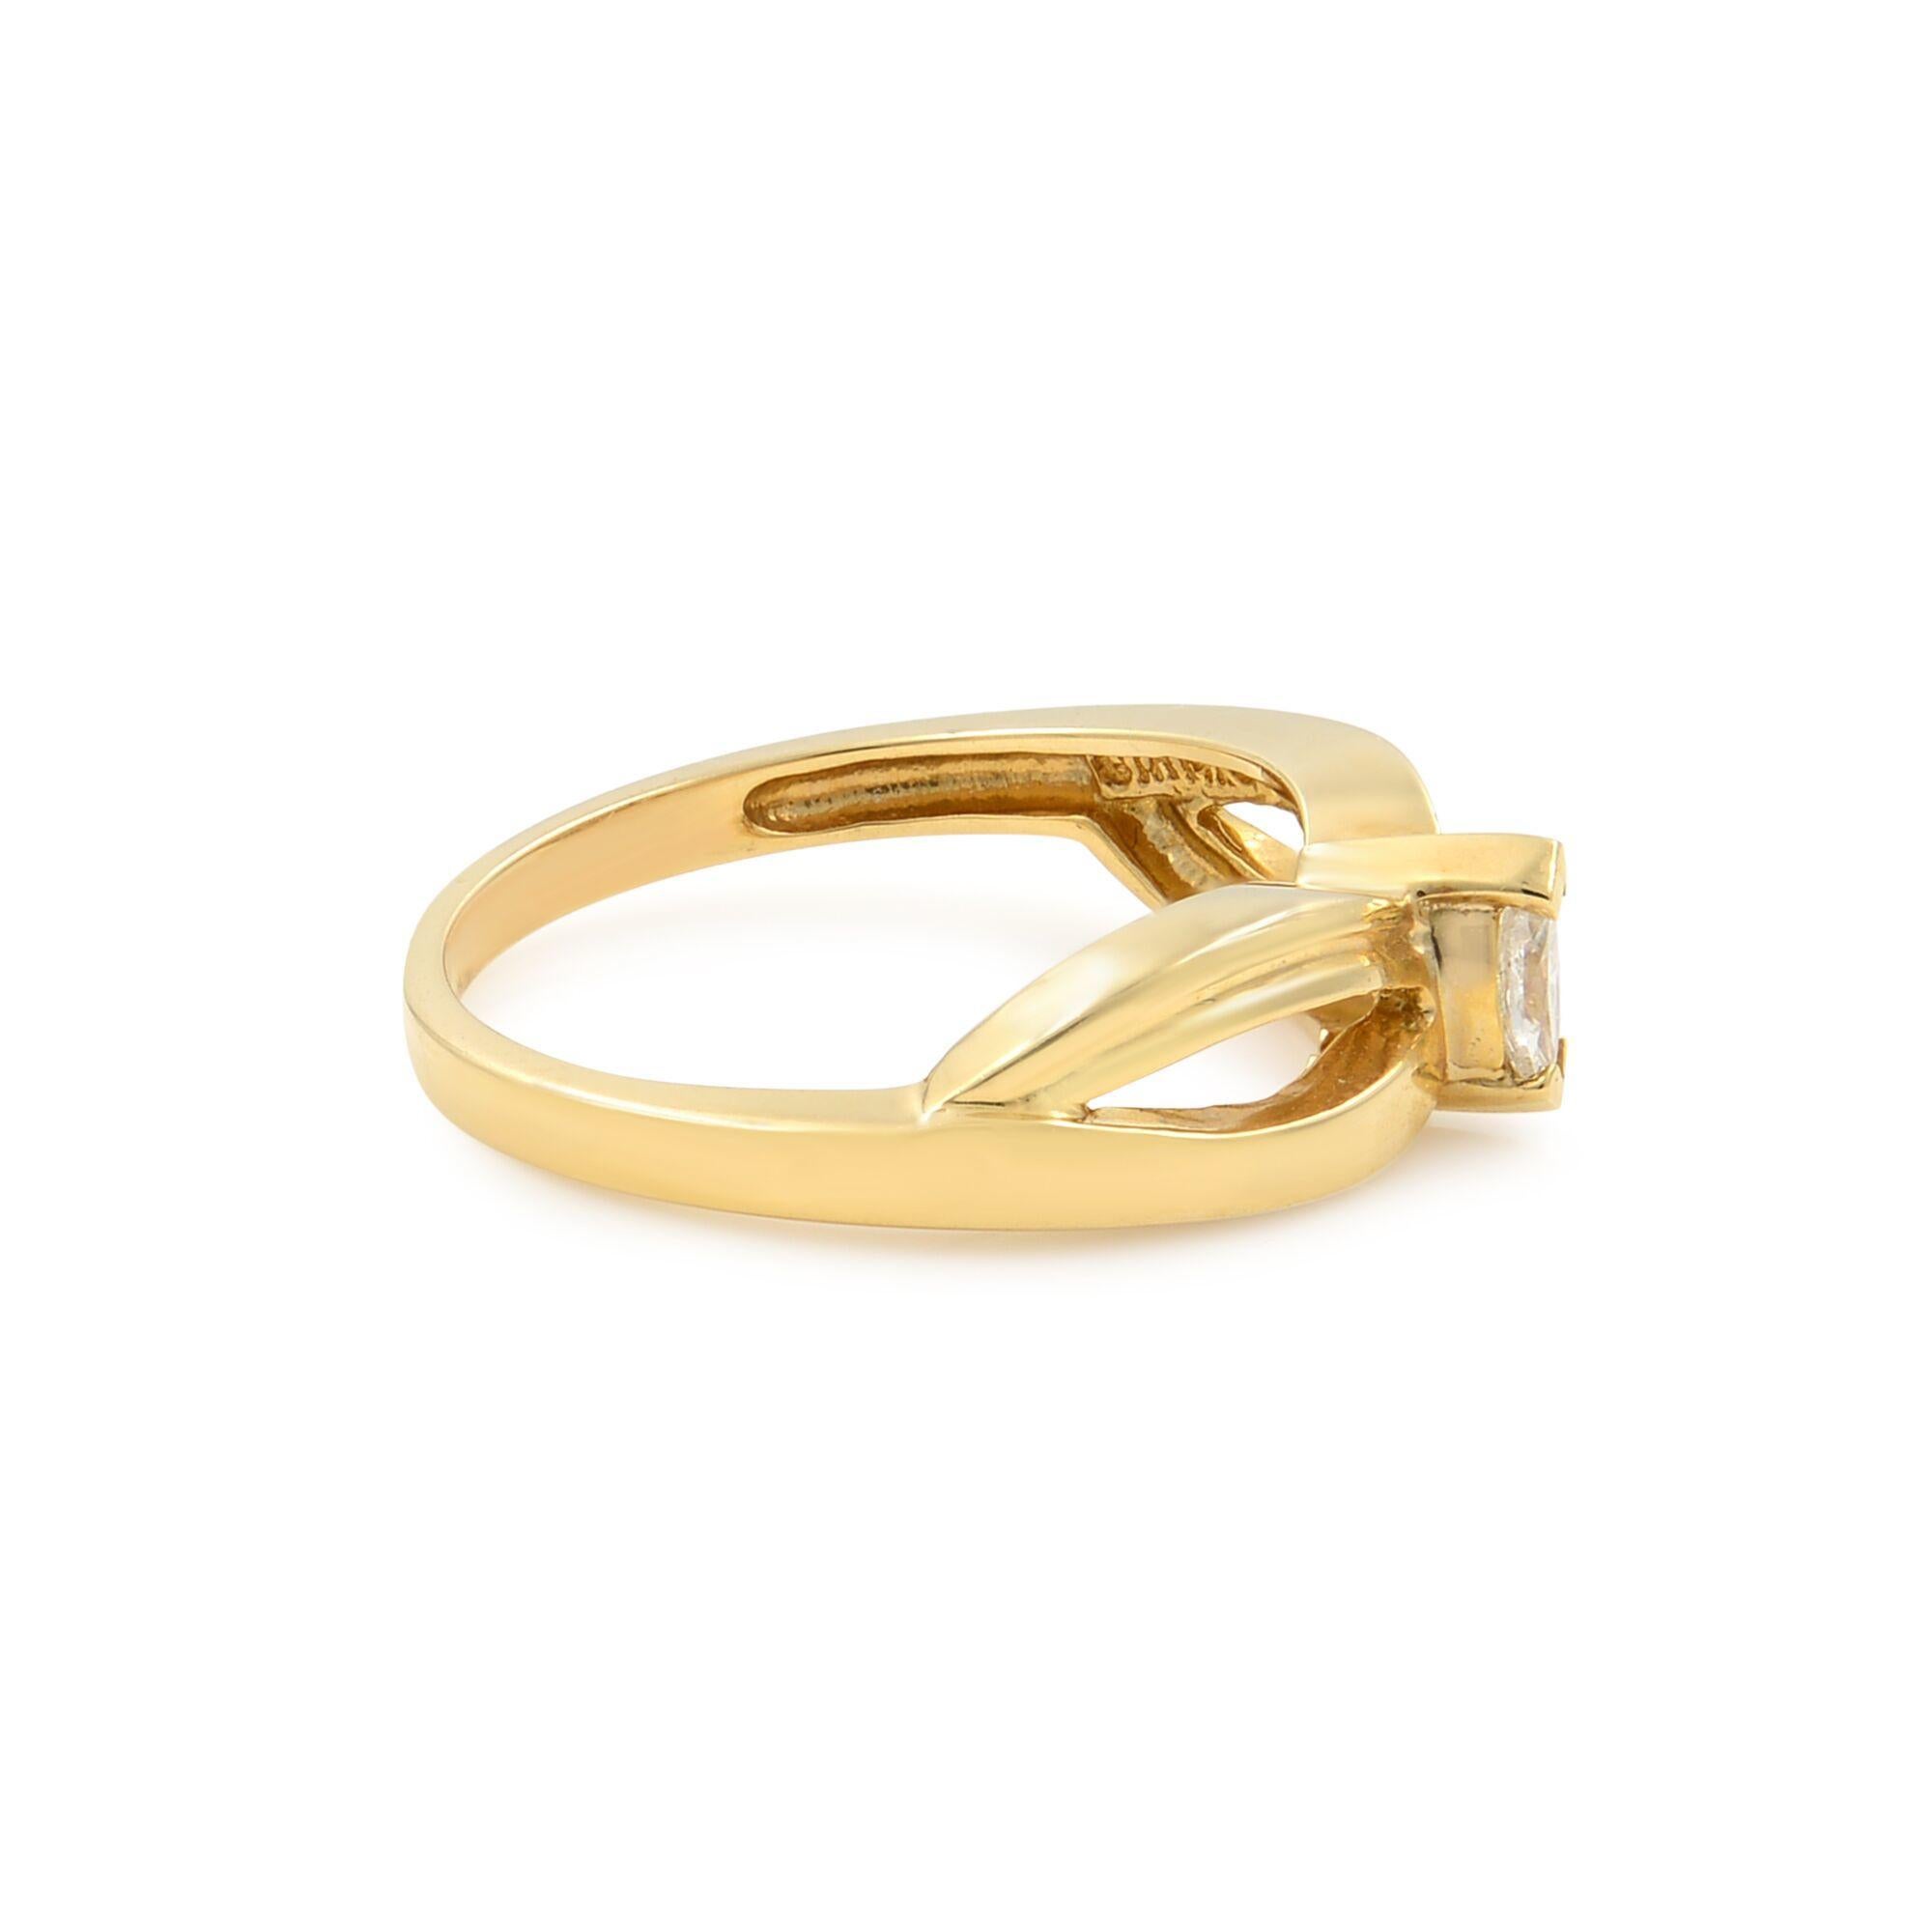 Modern Rachel Koen Marquise Cut Diamond Ladies Ring 14K Yellow Gold 0.12Cttw For Sale